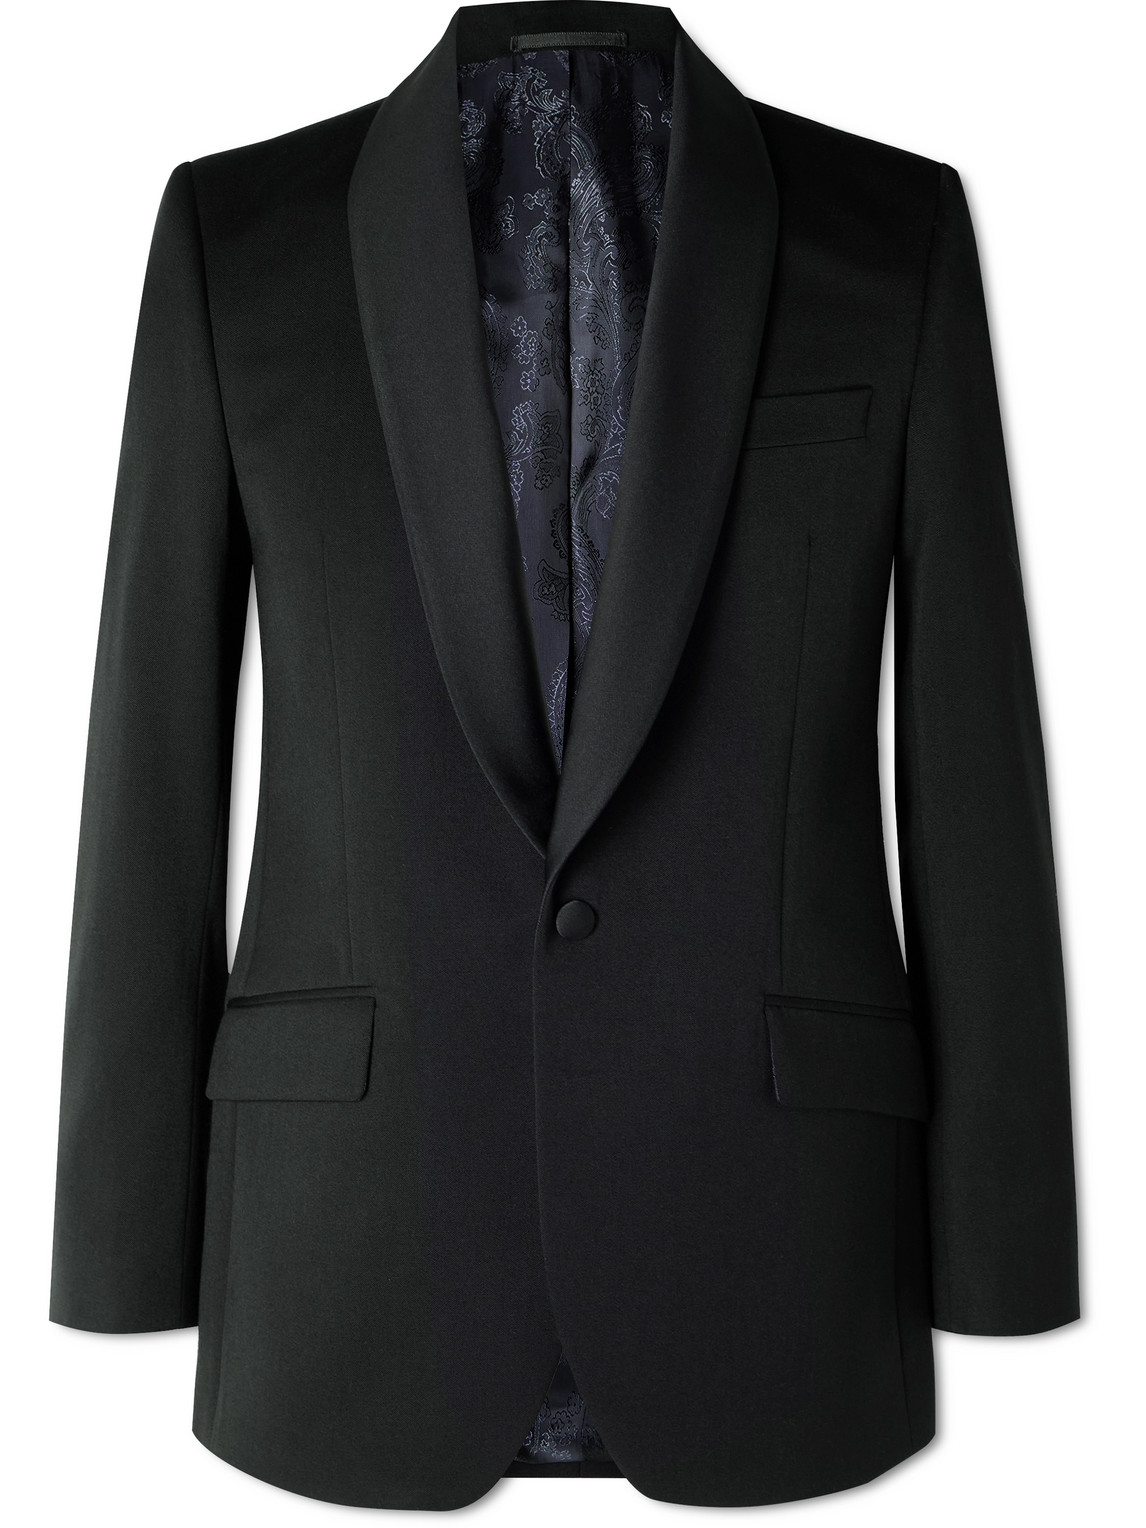 Hampton Shawl-Collar Grosgrain-Trimmed Wool Tuxedo Jacket